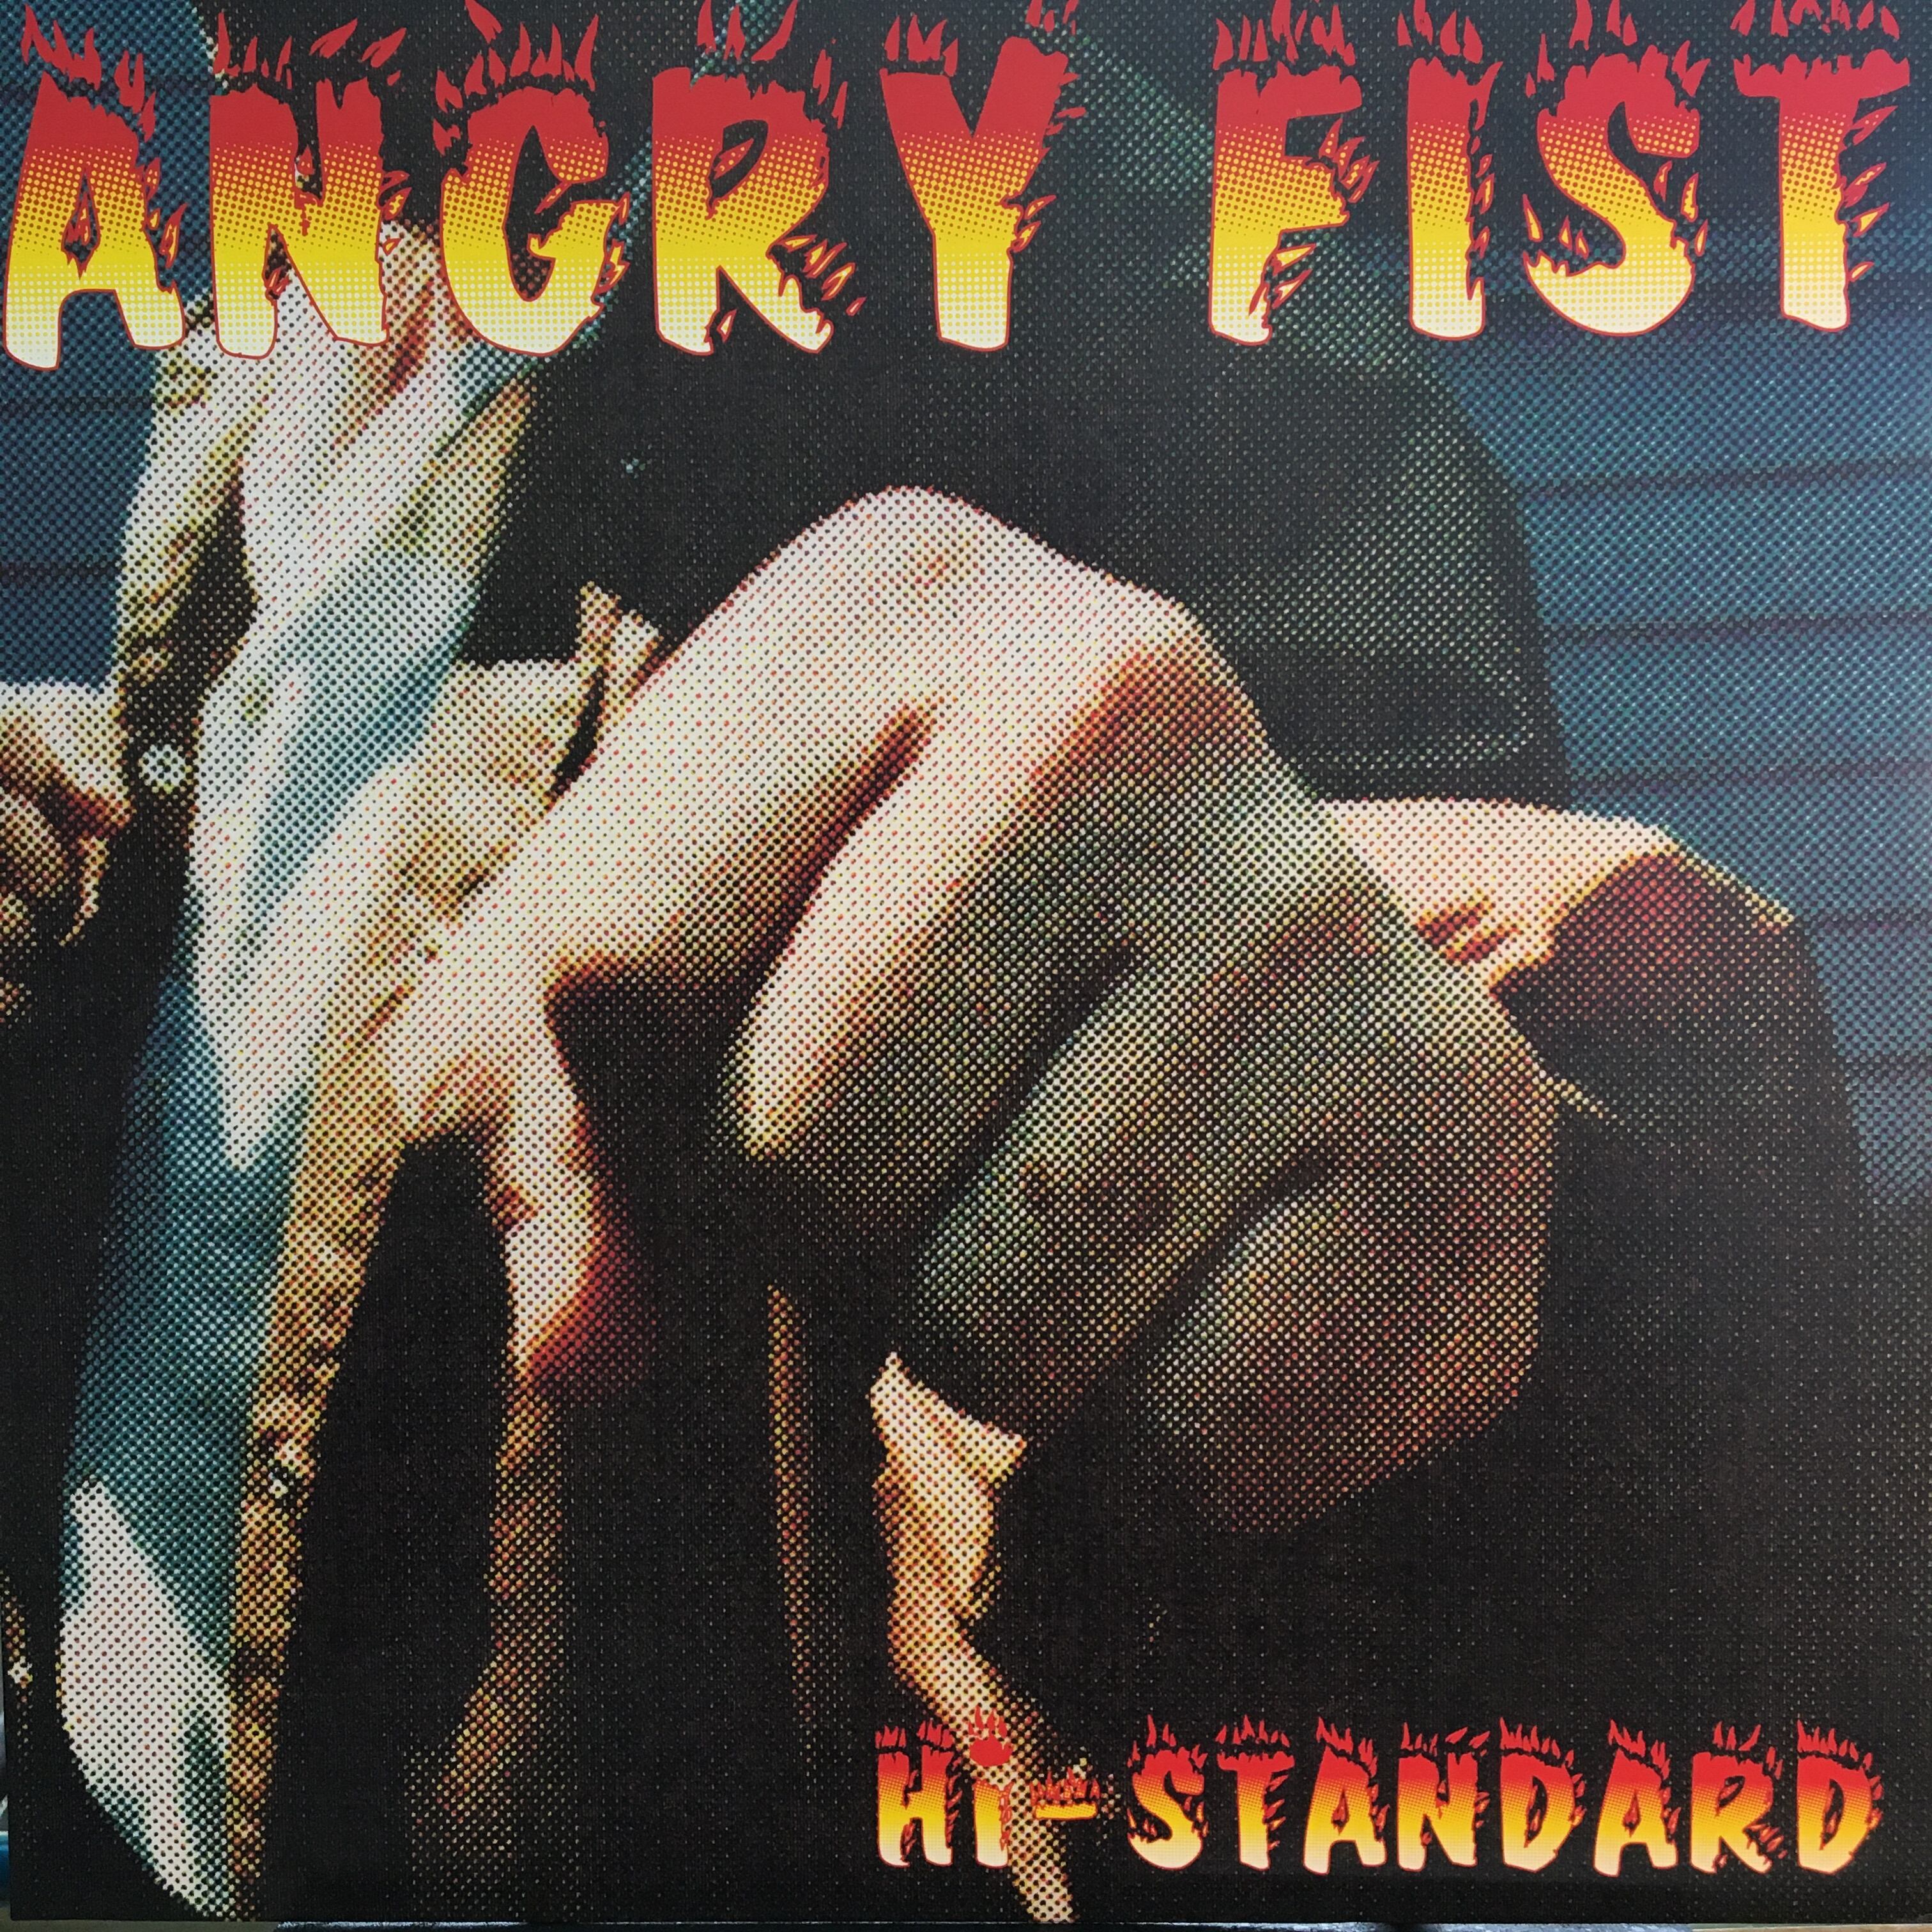 Hi-STANDARD ANGRY FIST レコード - 邦楽